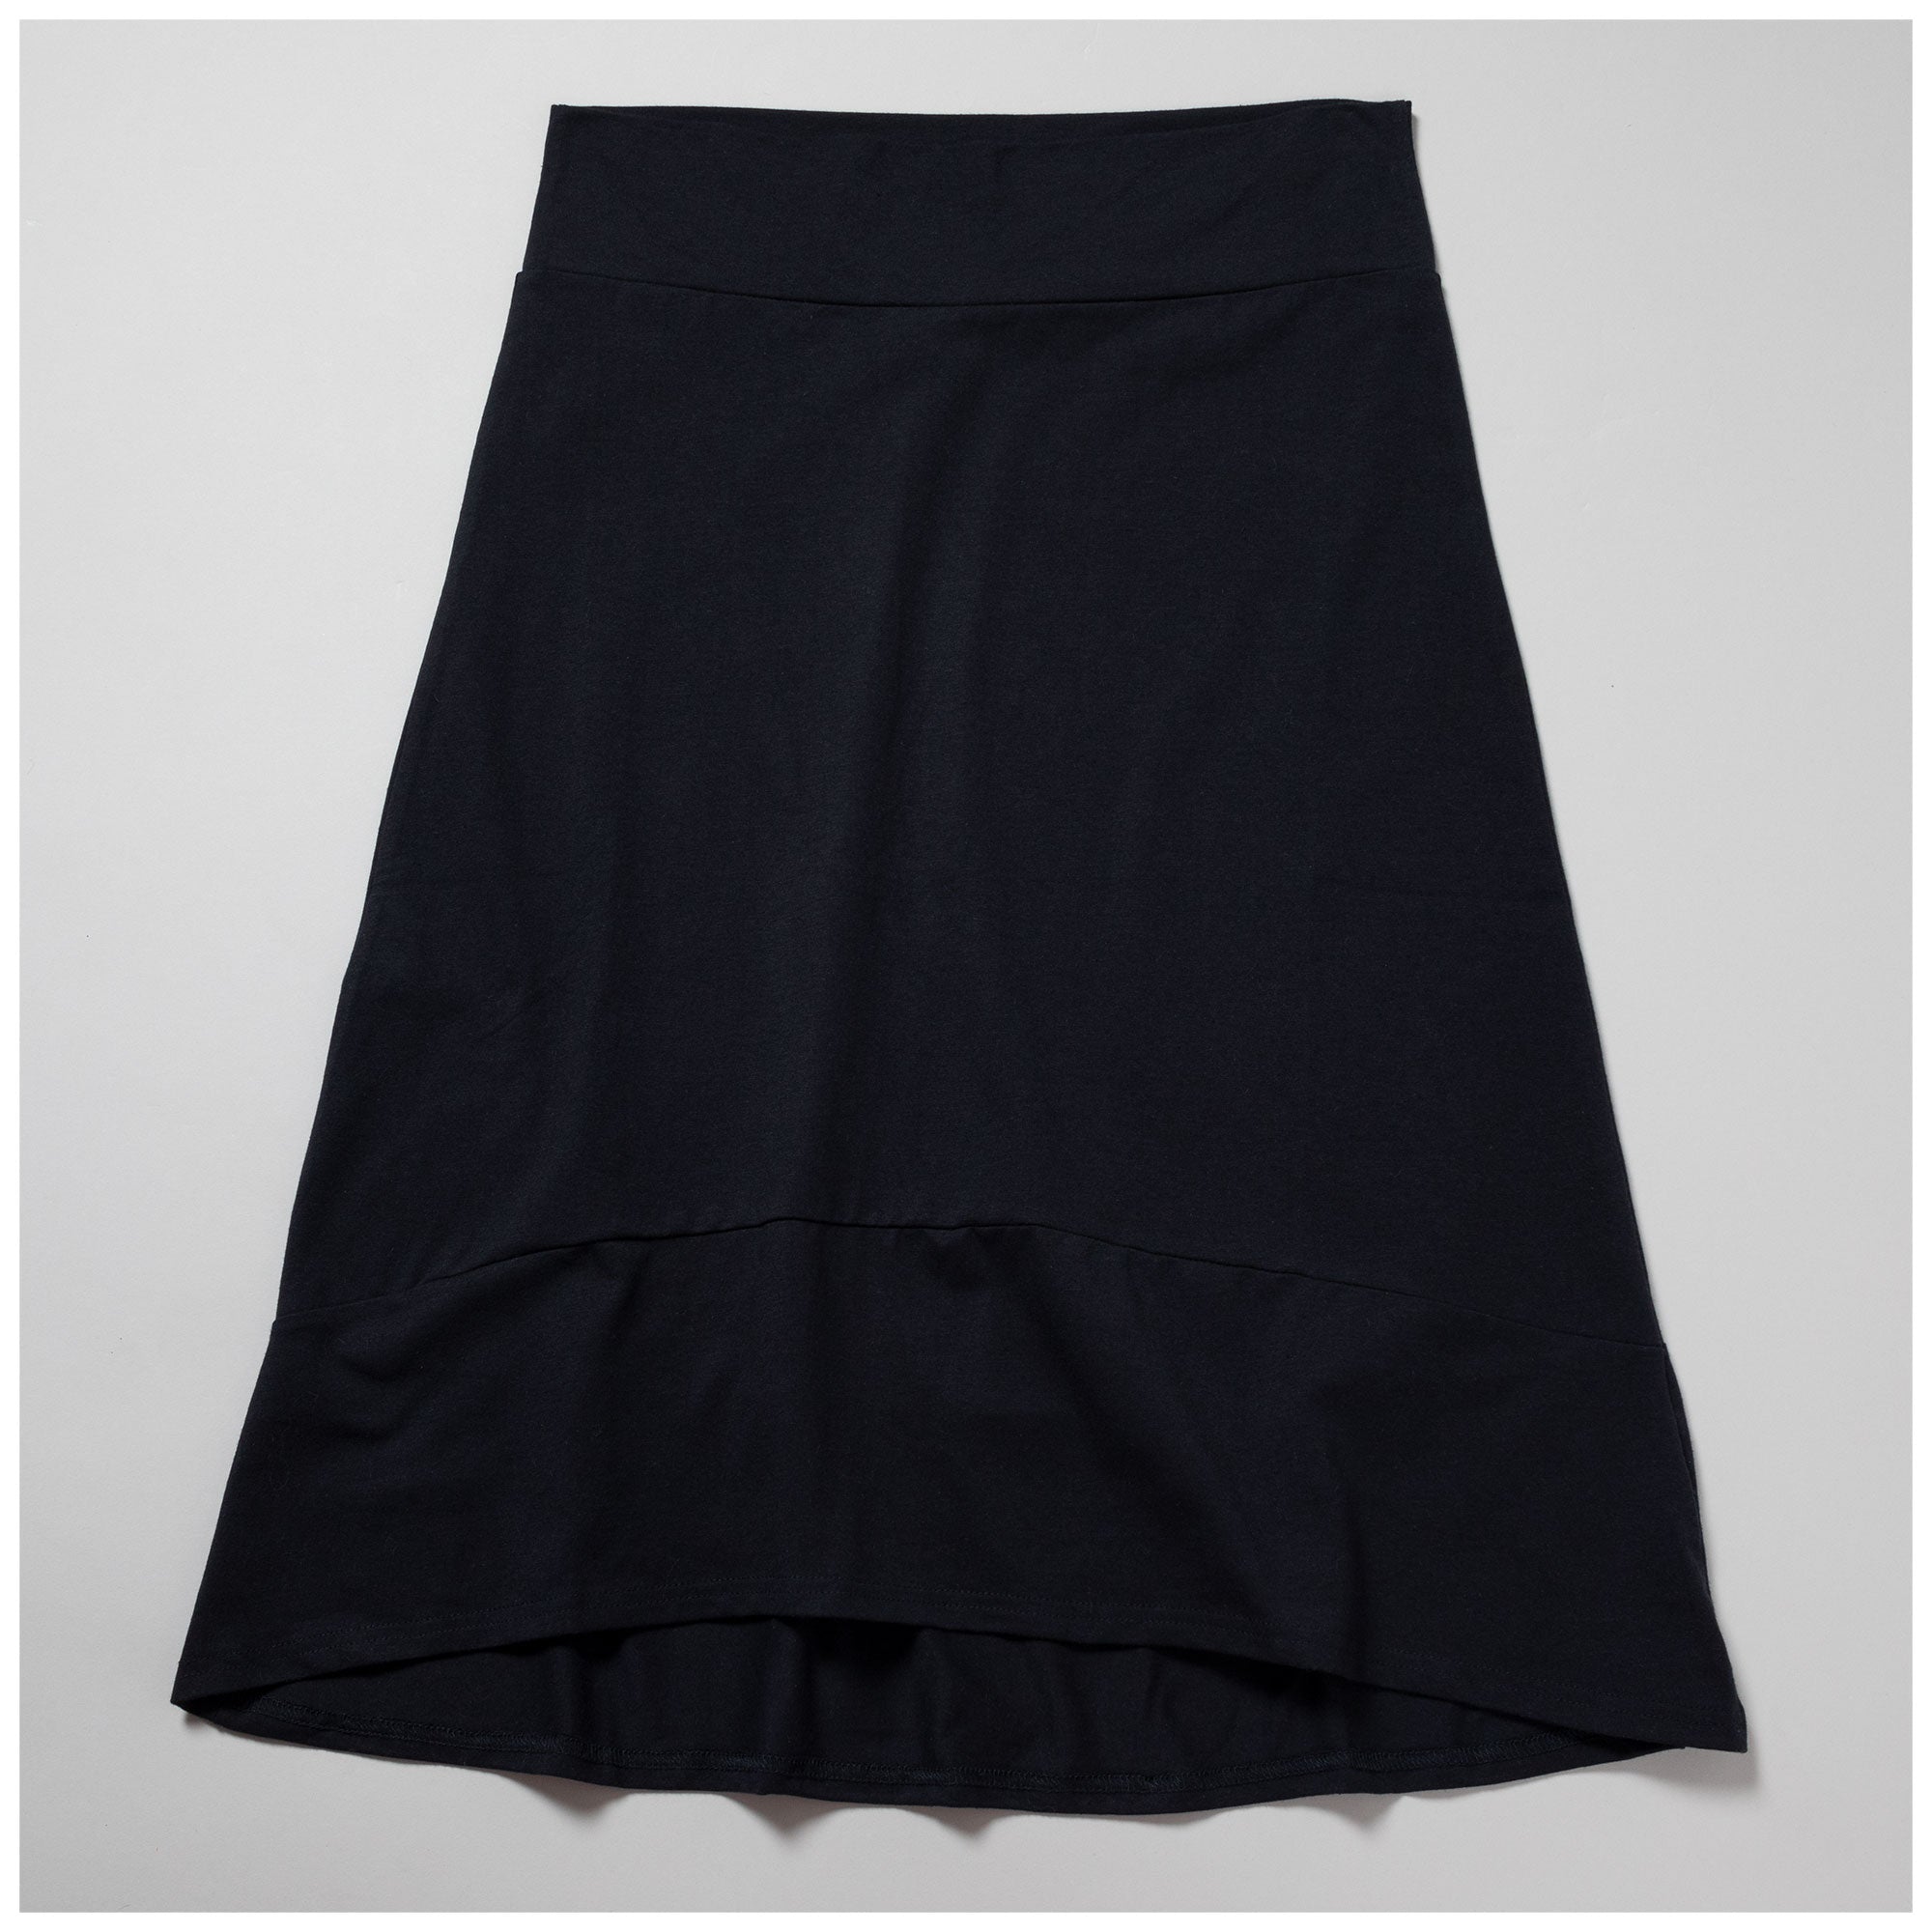 Organic High Low Skirt - Black - S